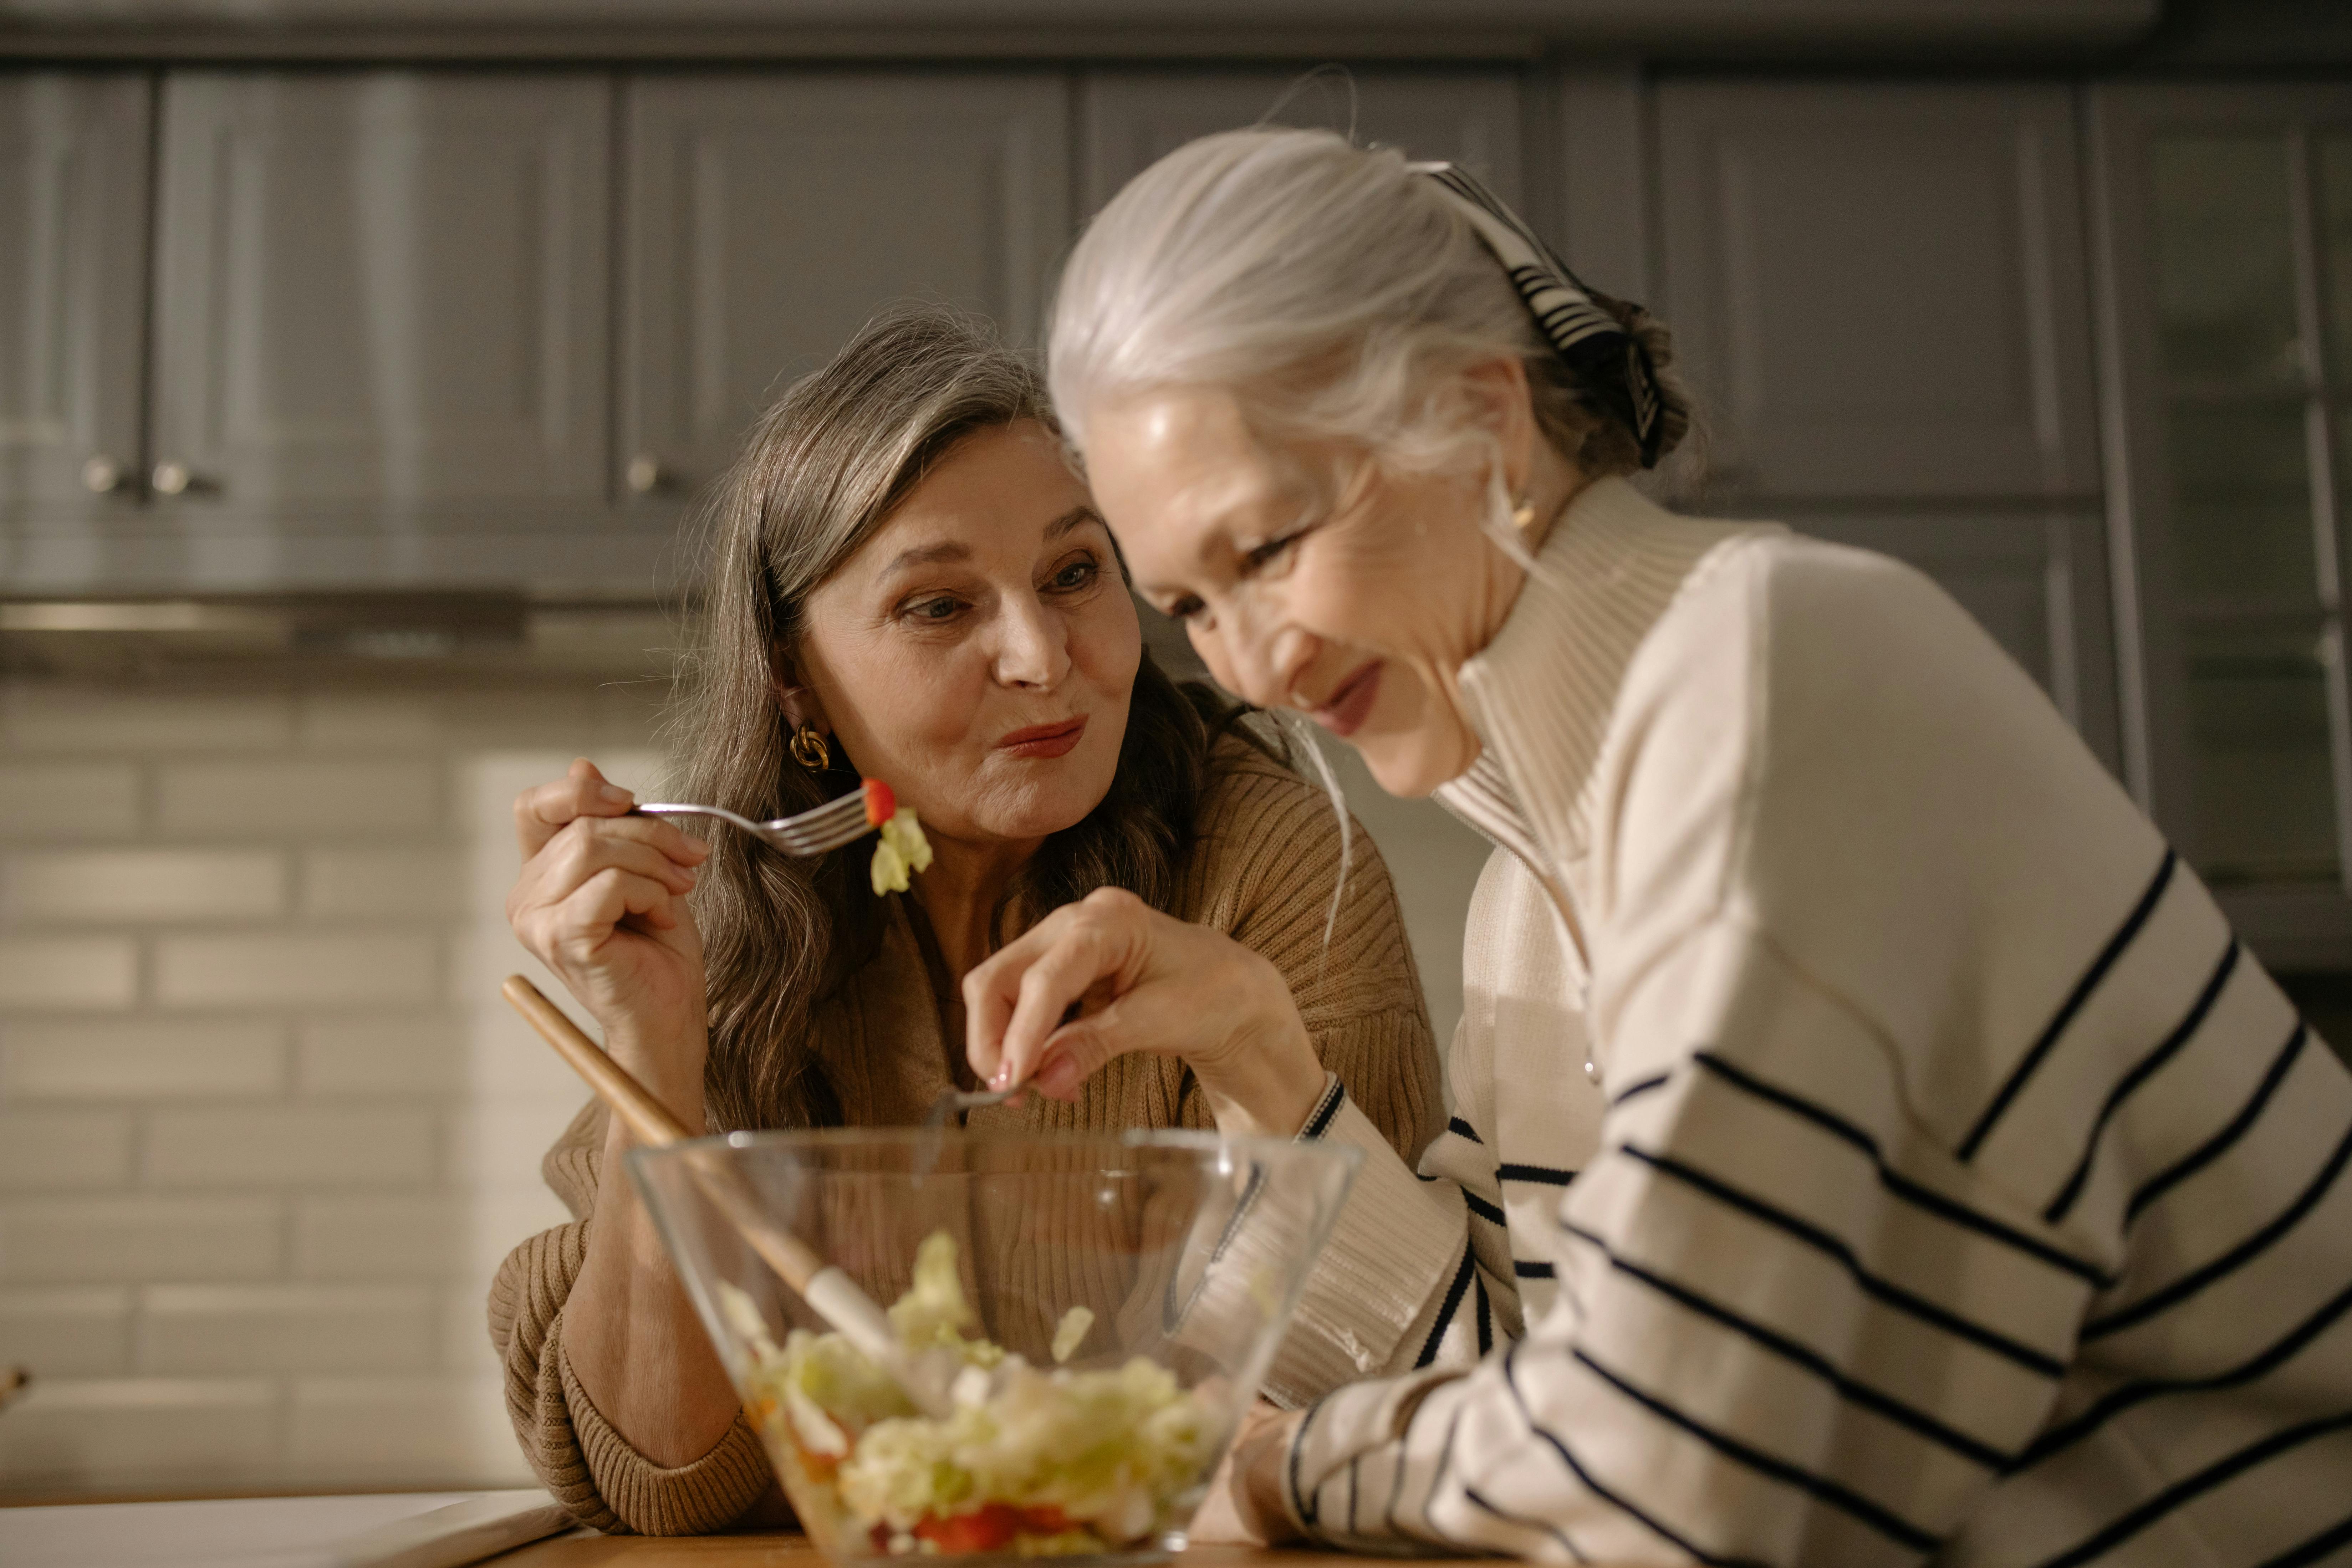 an elderly women eating salad in the kitchen